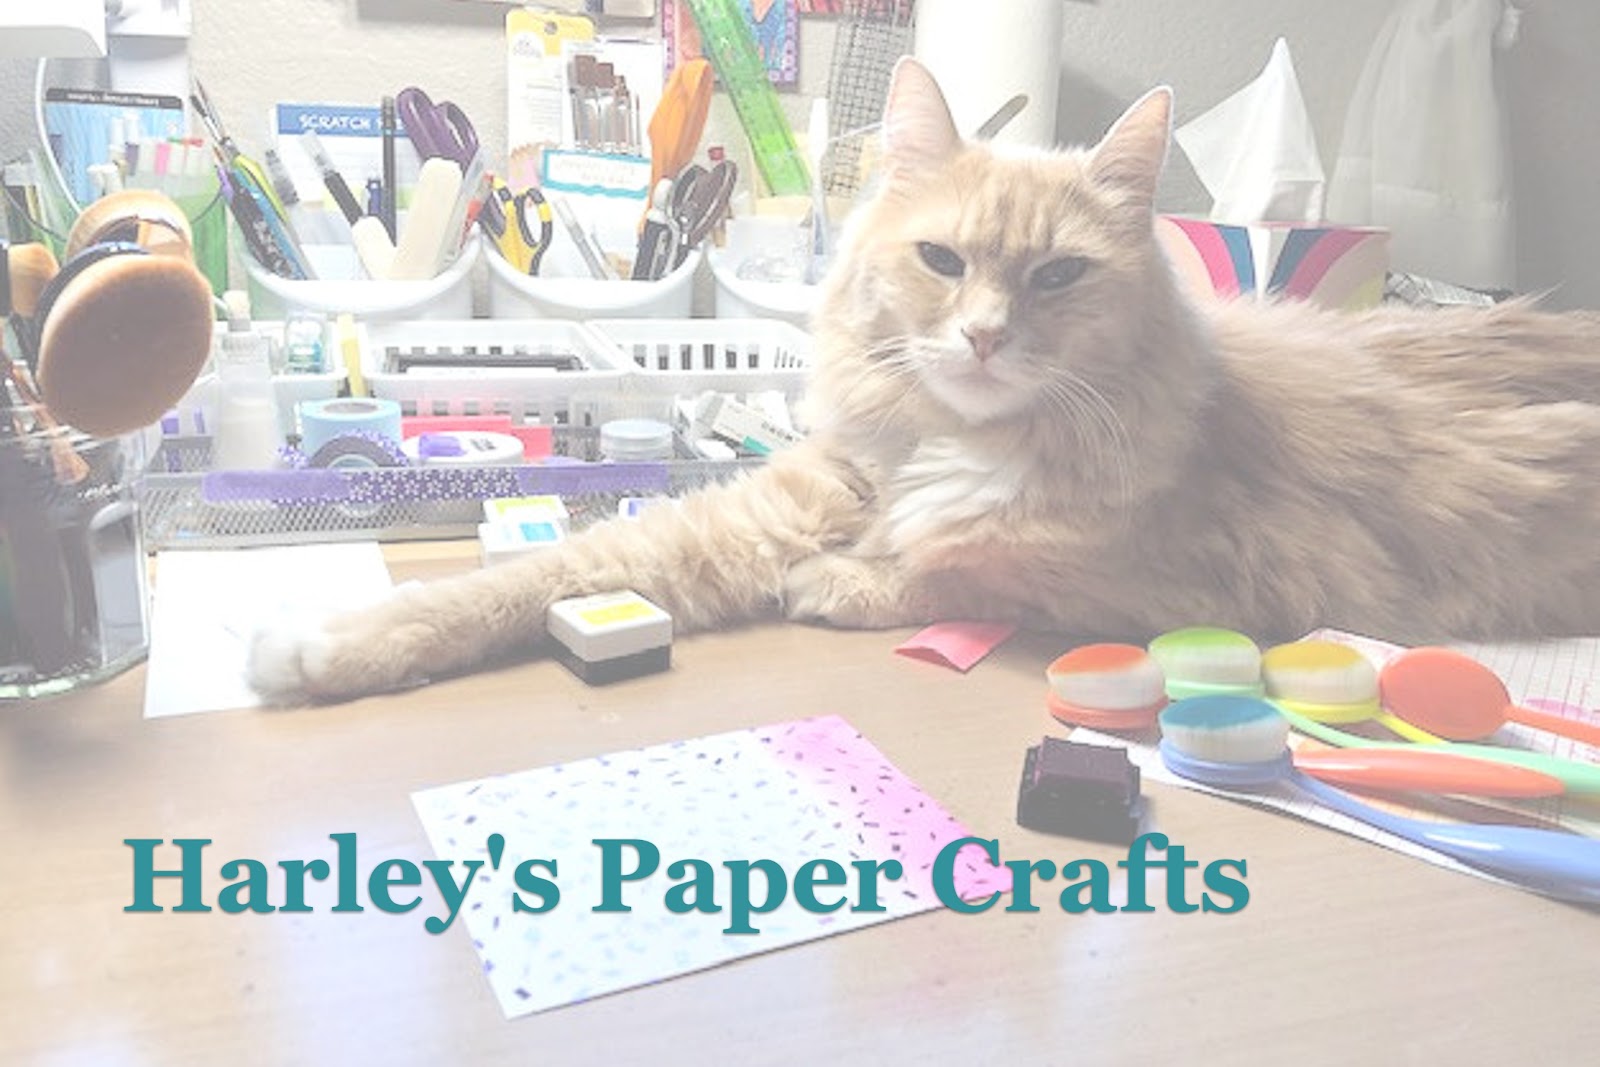 Harley's Paper Crafts